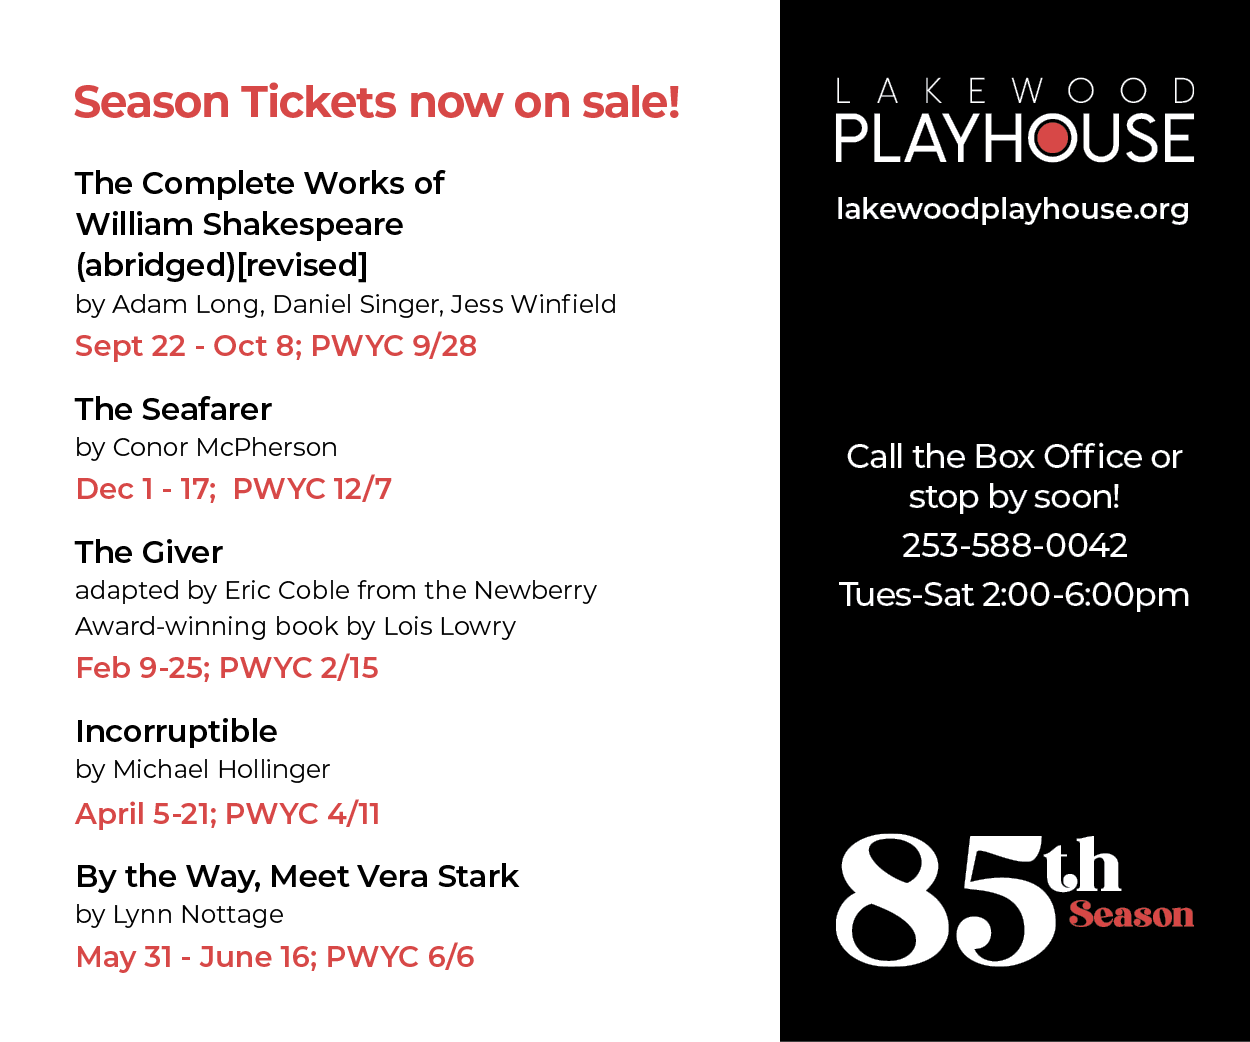 Lakewood Playhouse - 85th Season